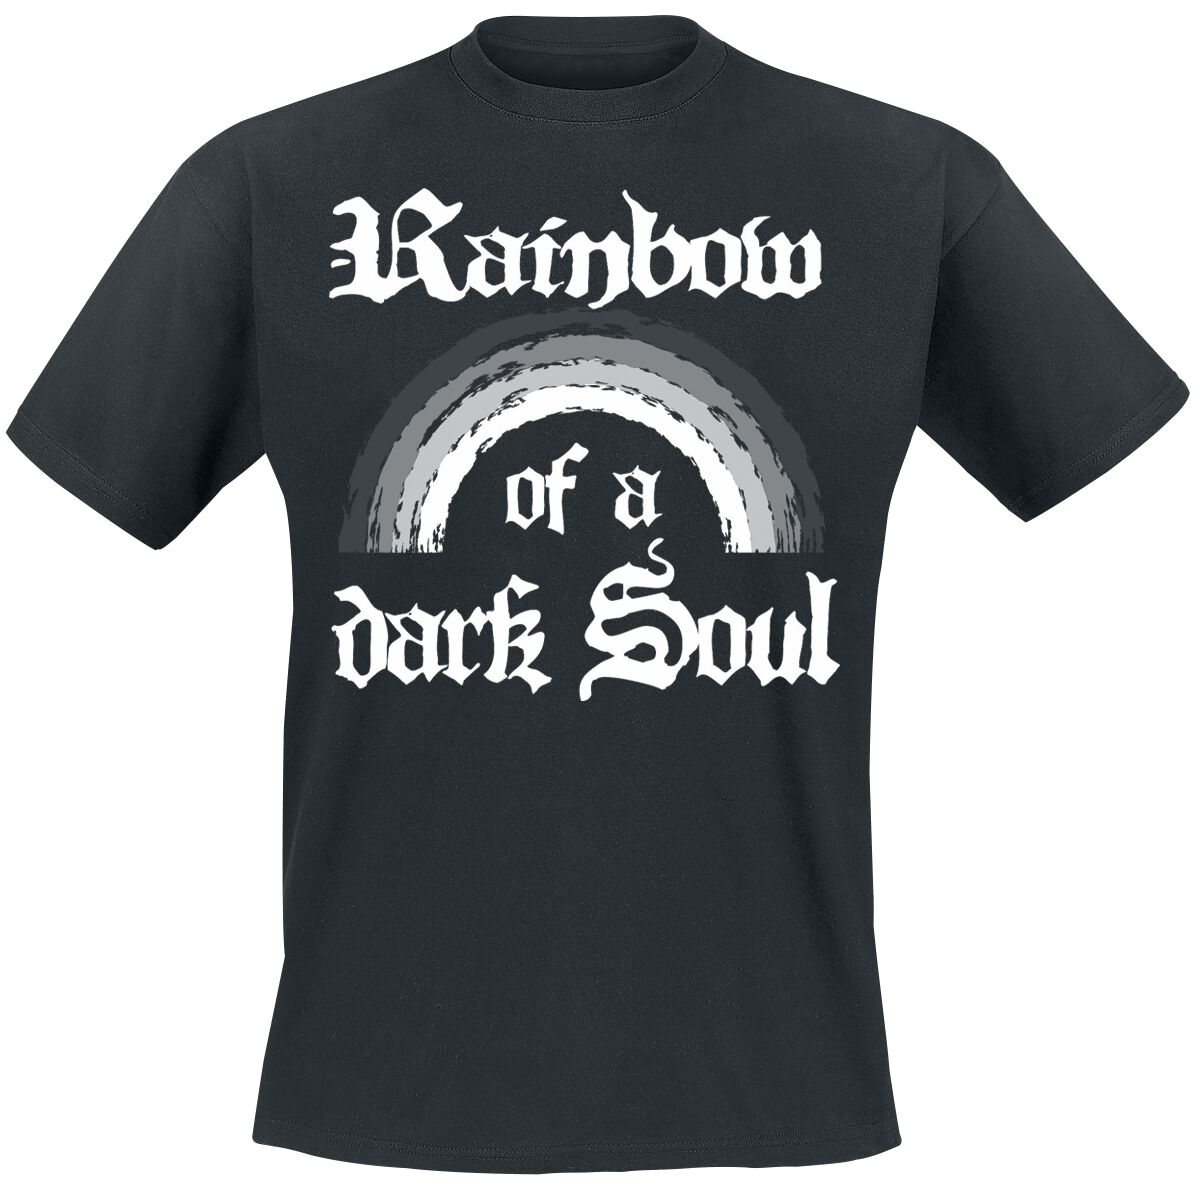 Rainbow Of A Dark Soul  T-Shirt black